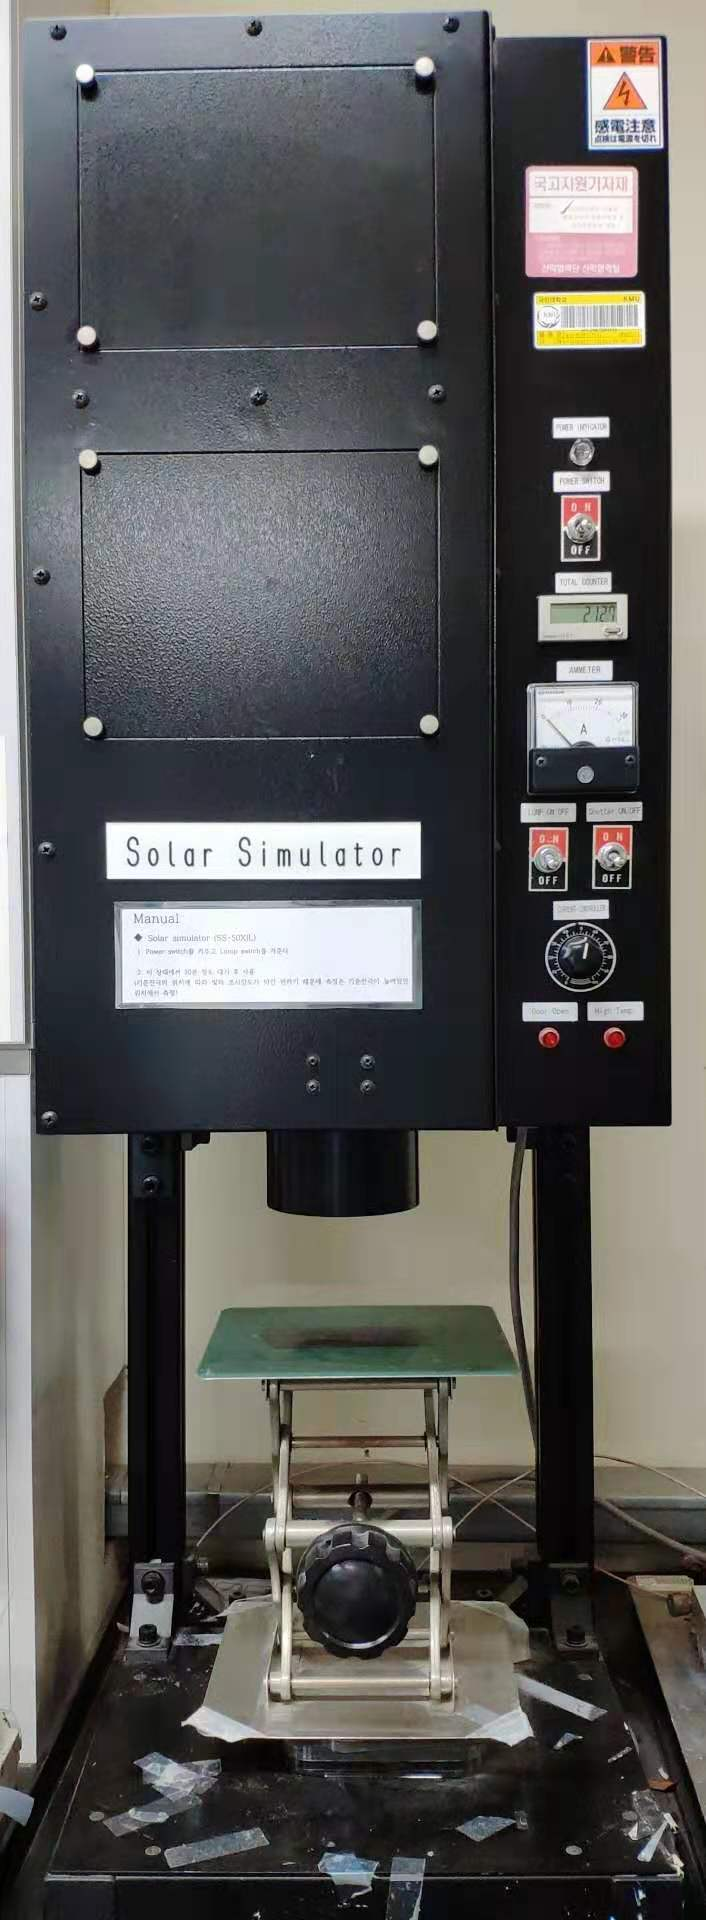 Solar Simulator